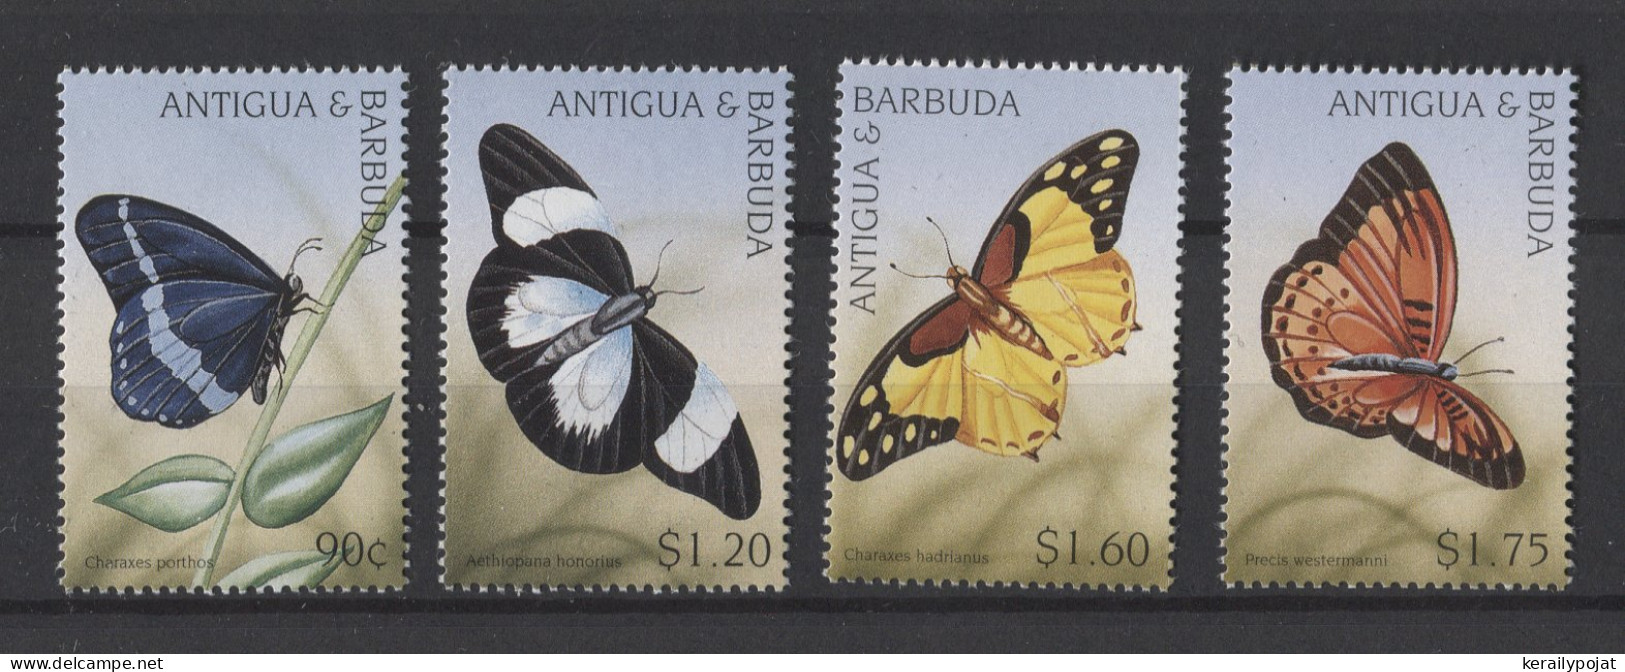 Antigua - 1997 Butterflies MNH__(TH-24763) - Antigua And Barbuda (1981-...)